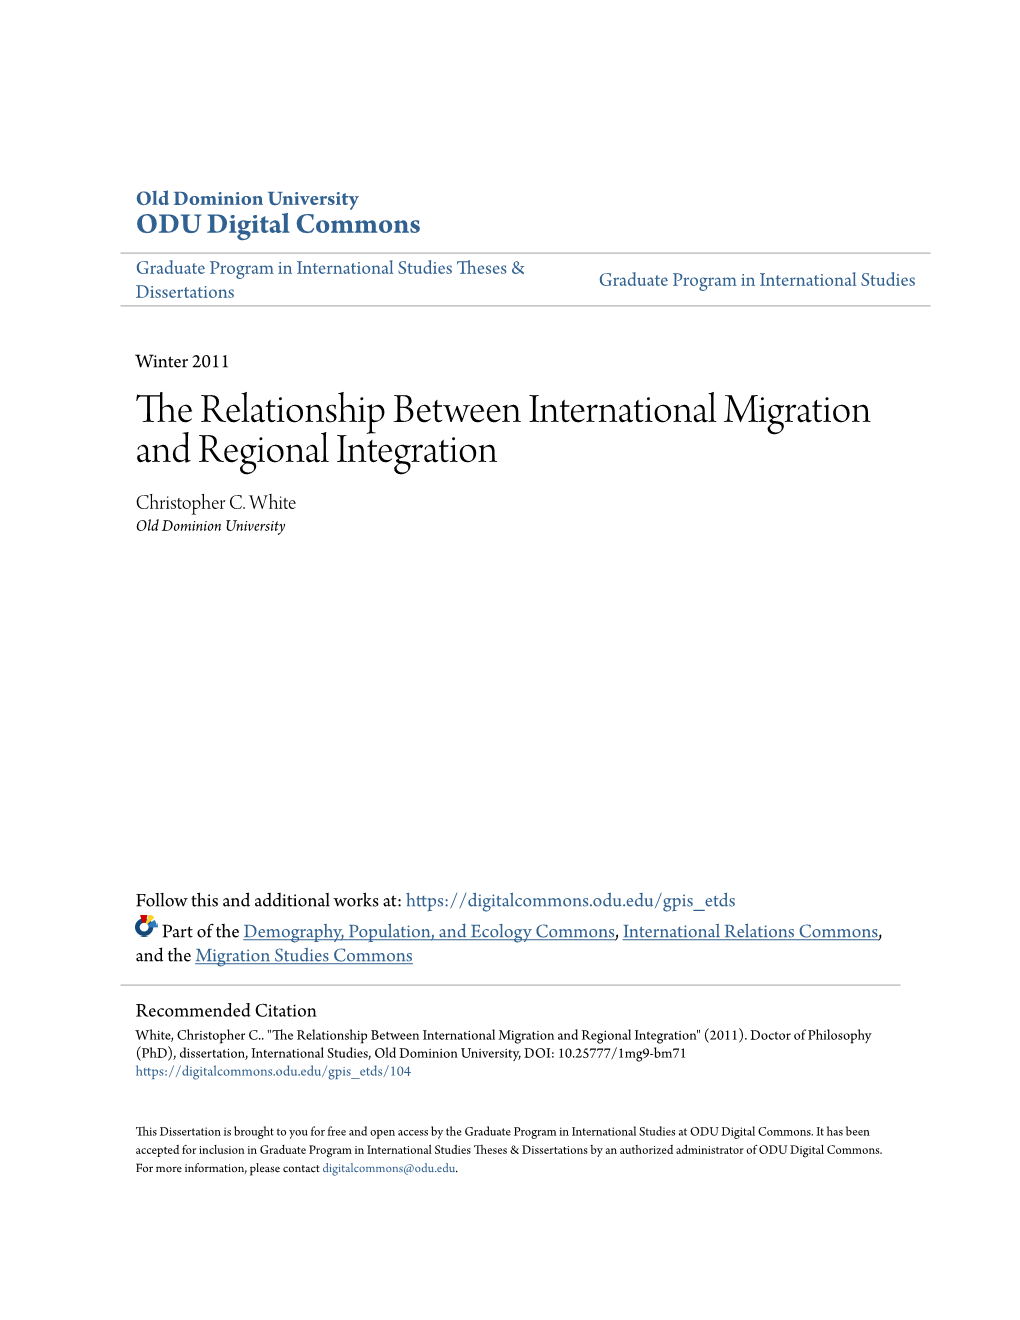 The Relationship Between International Migration and Regional Integration Christopher C